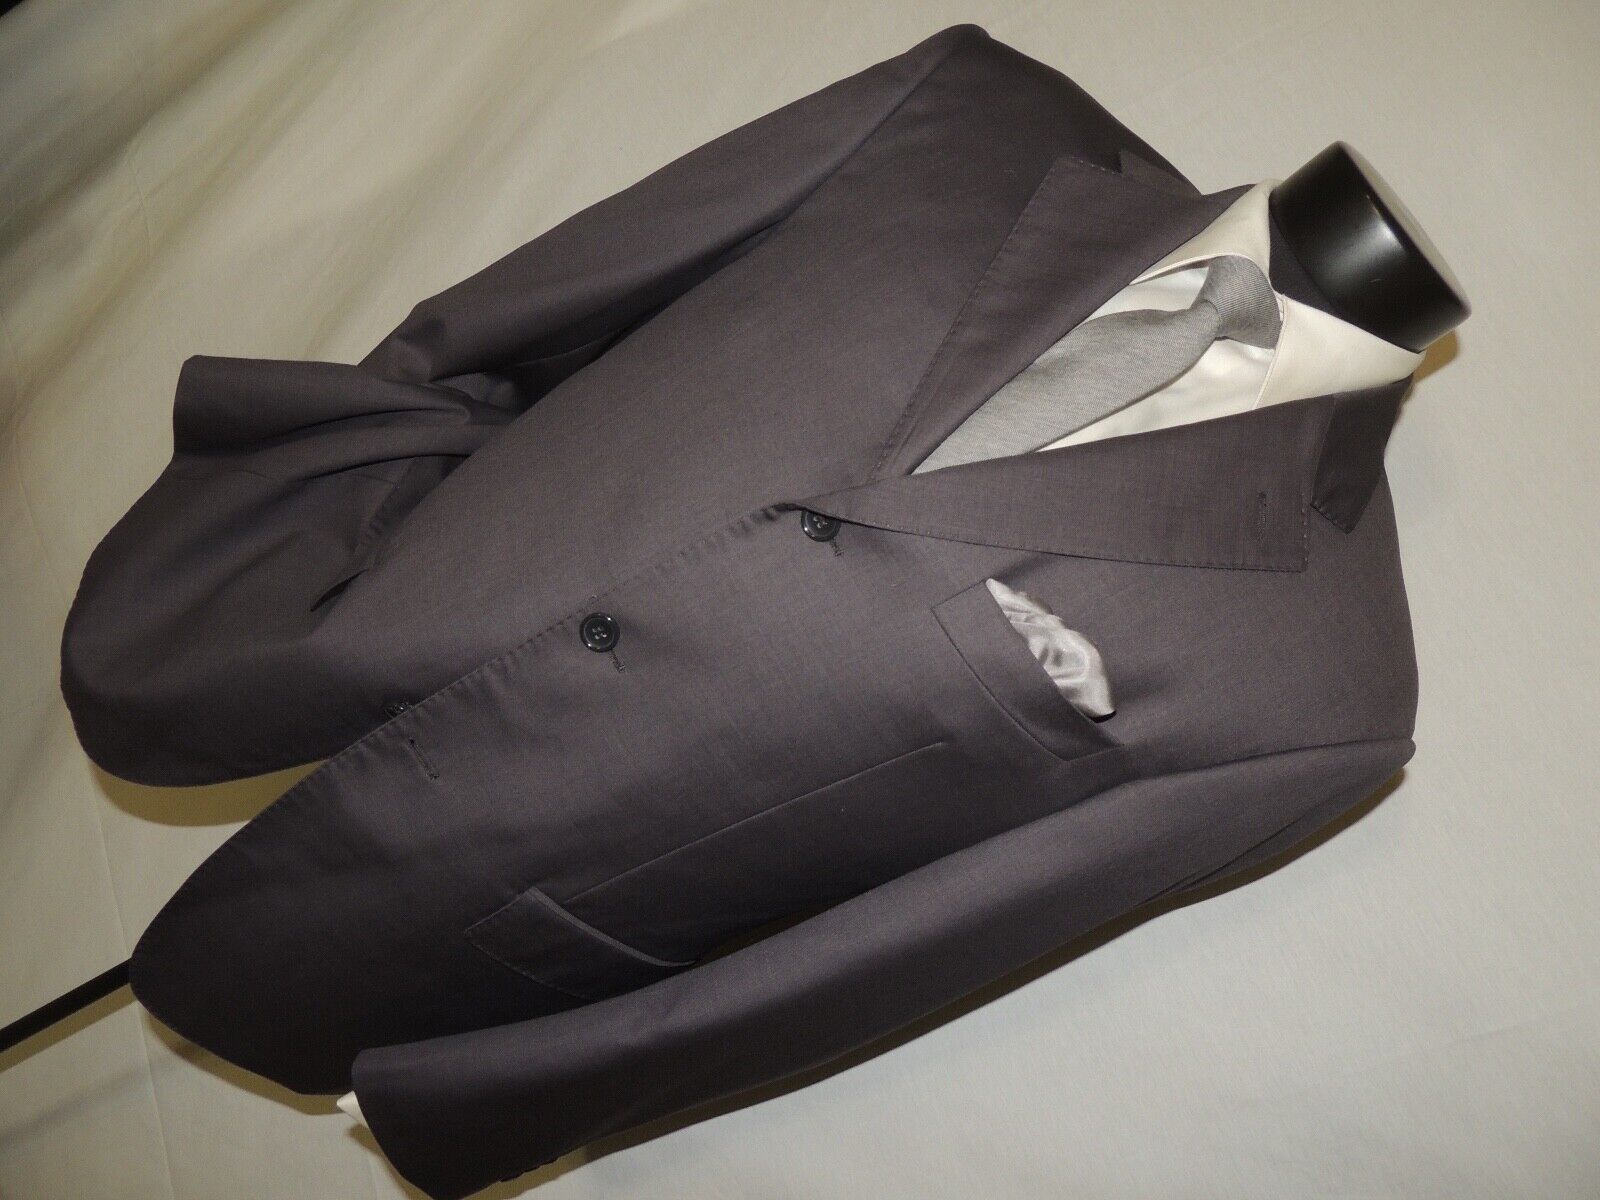 L-091621 Ermenegildo Zegna 3 button dual vents Gray 100% wool coat jacket 44 R Regularna zniżka